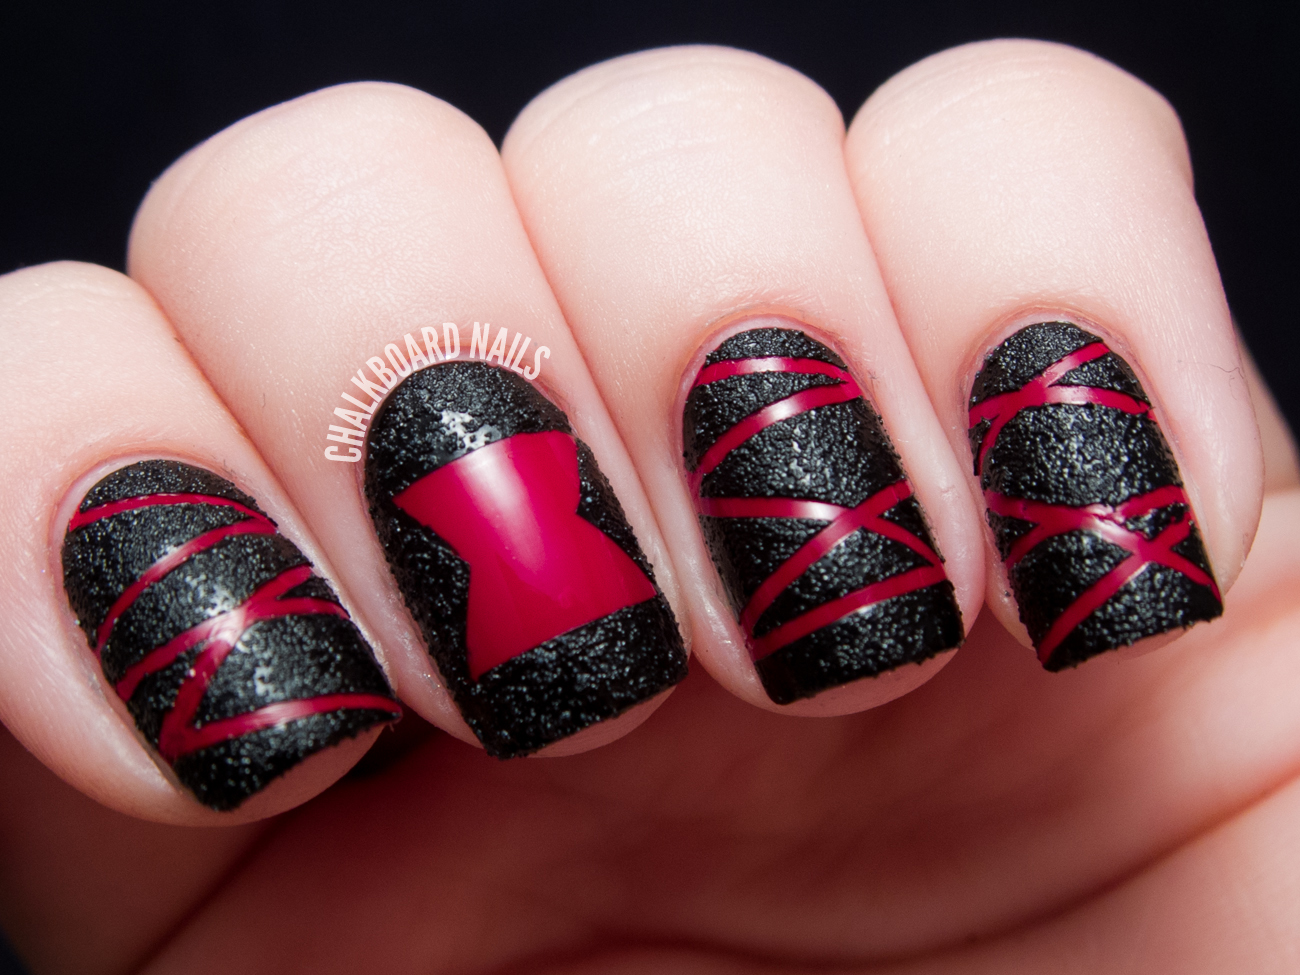 TUTORIAL: Black Widow Spider Textured Nail Art | Chalkboard Nails ...